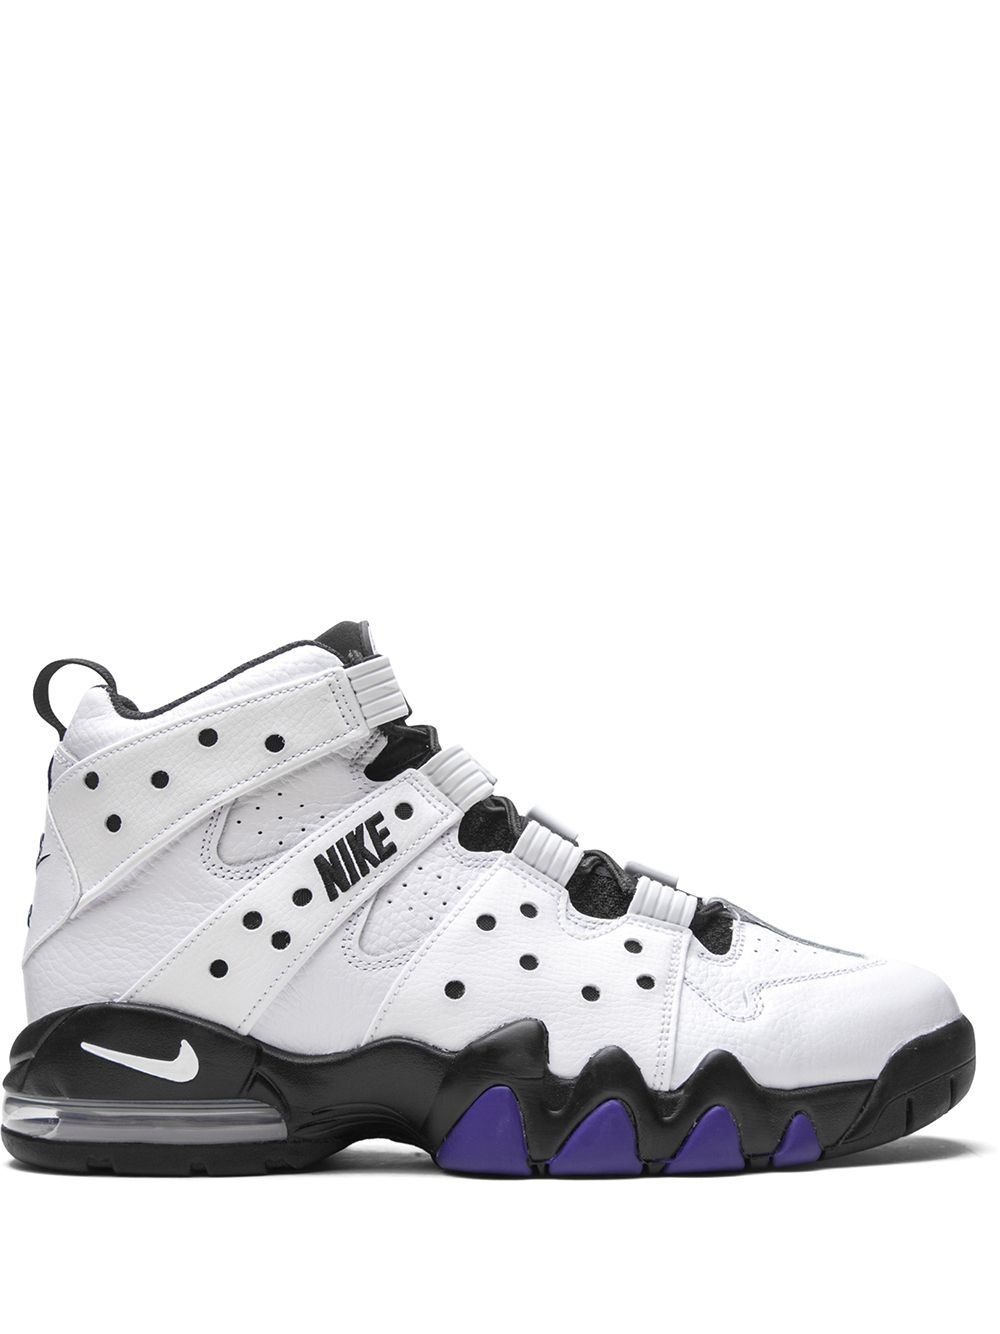 Air Max2 CB '94 "White/Varsity Purple" sneakers - 1